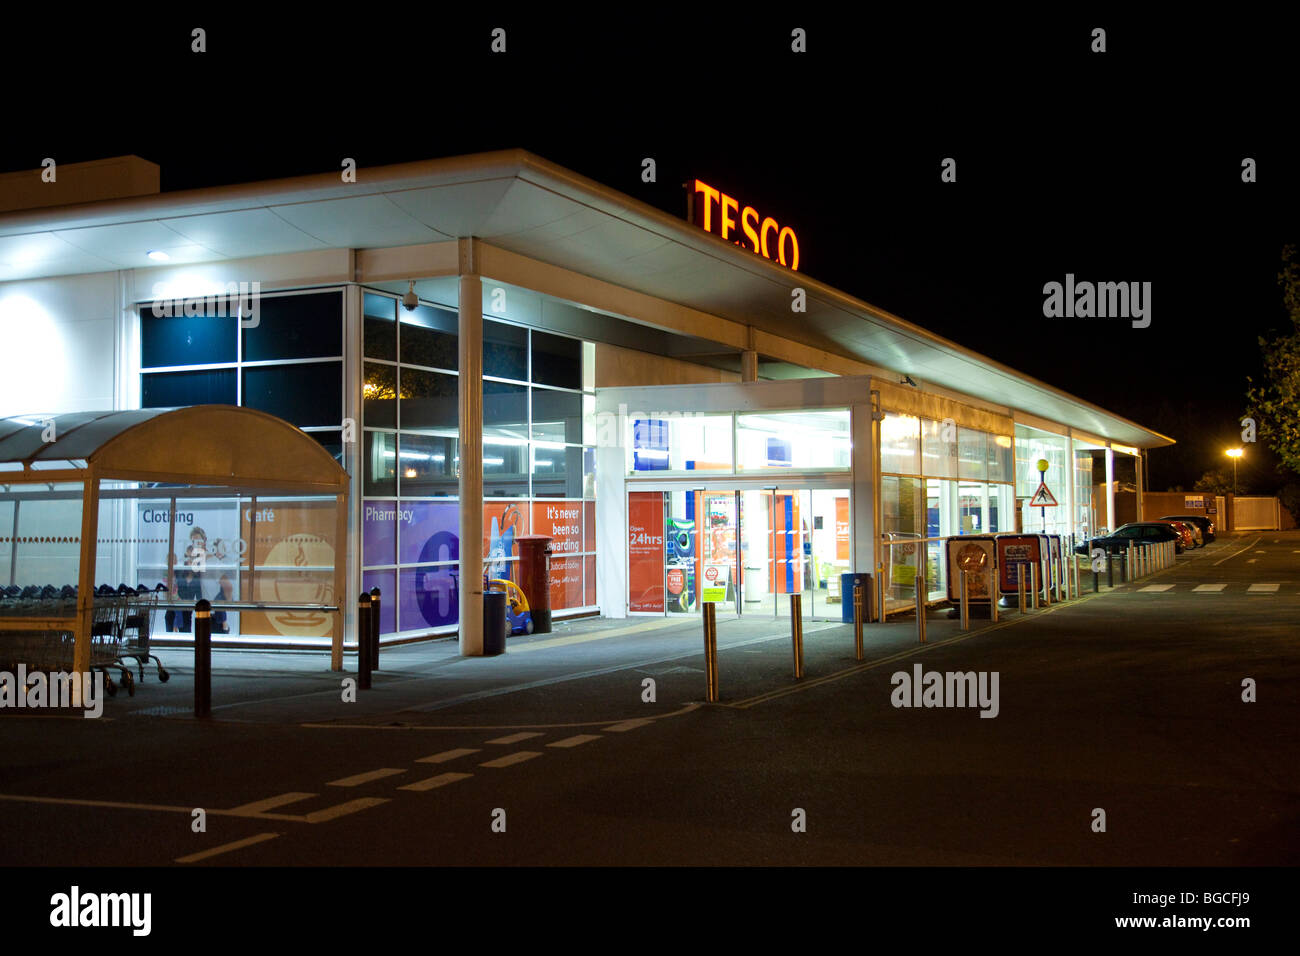 Tesco store at night Stock Photo